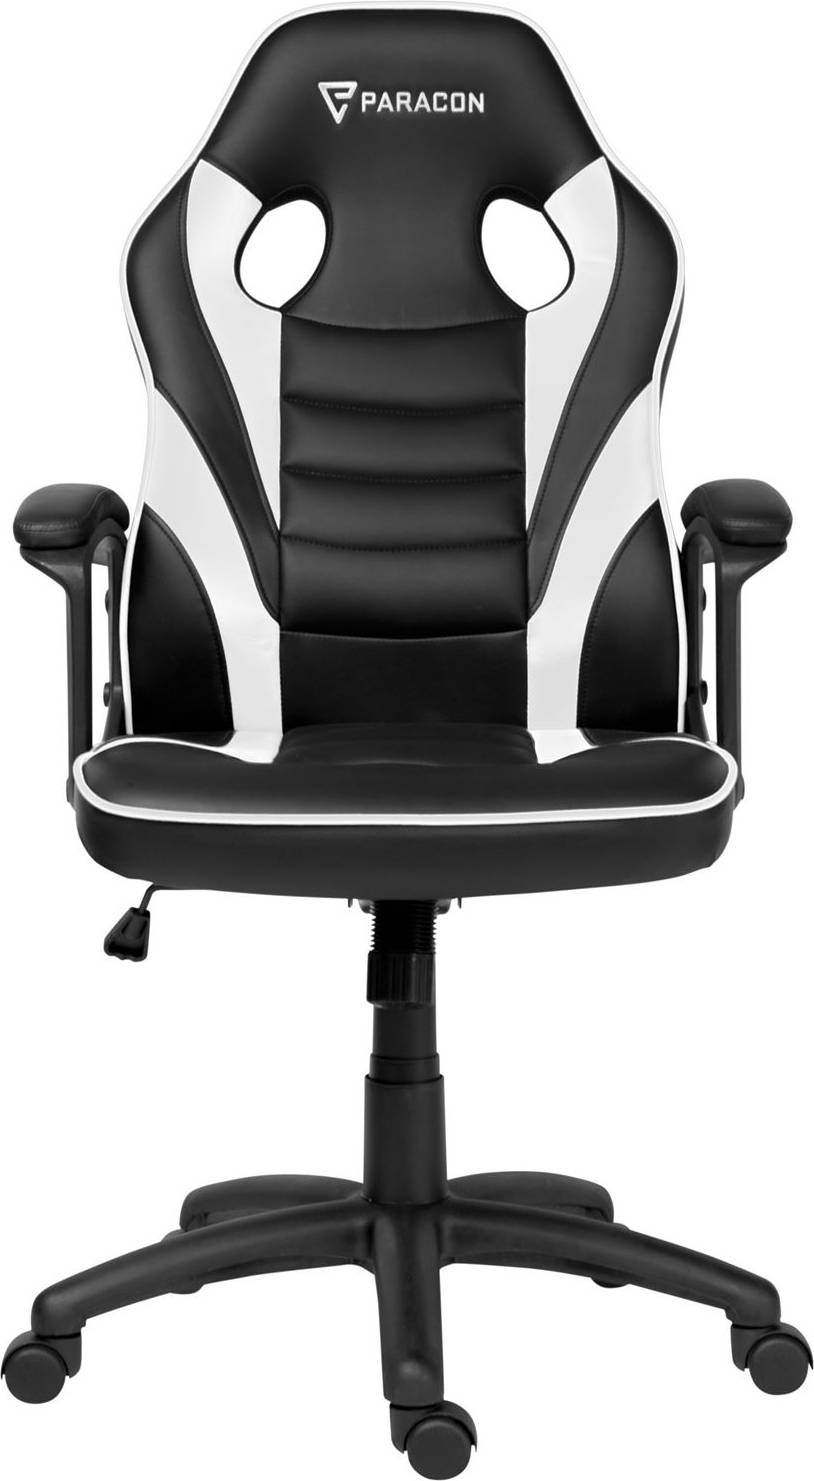  Bild på Paracon Squire Gaming Chair - Black/White gamingstol